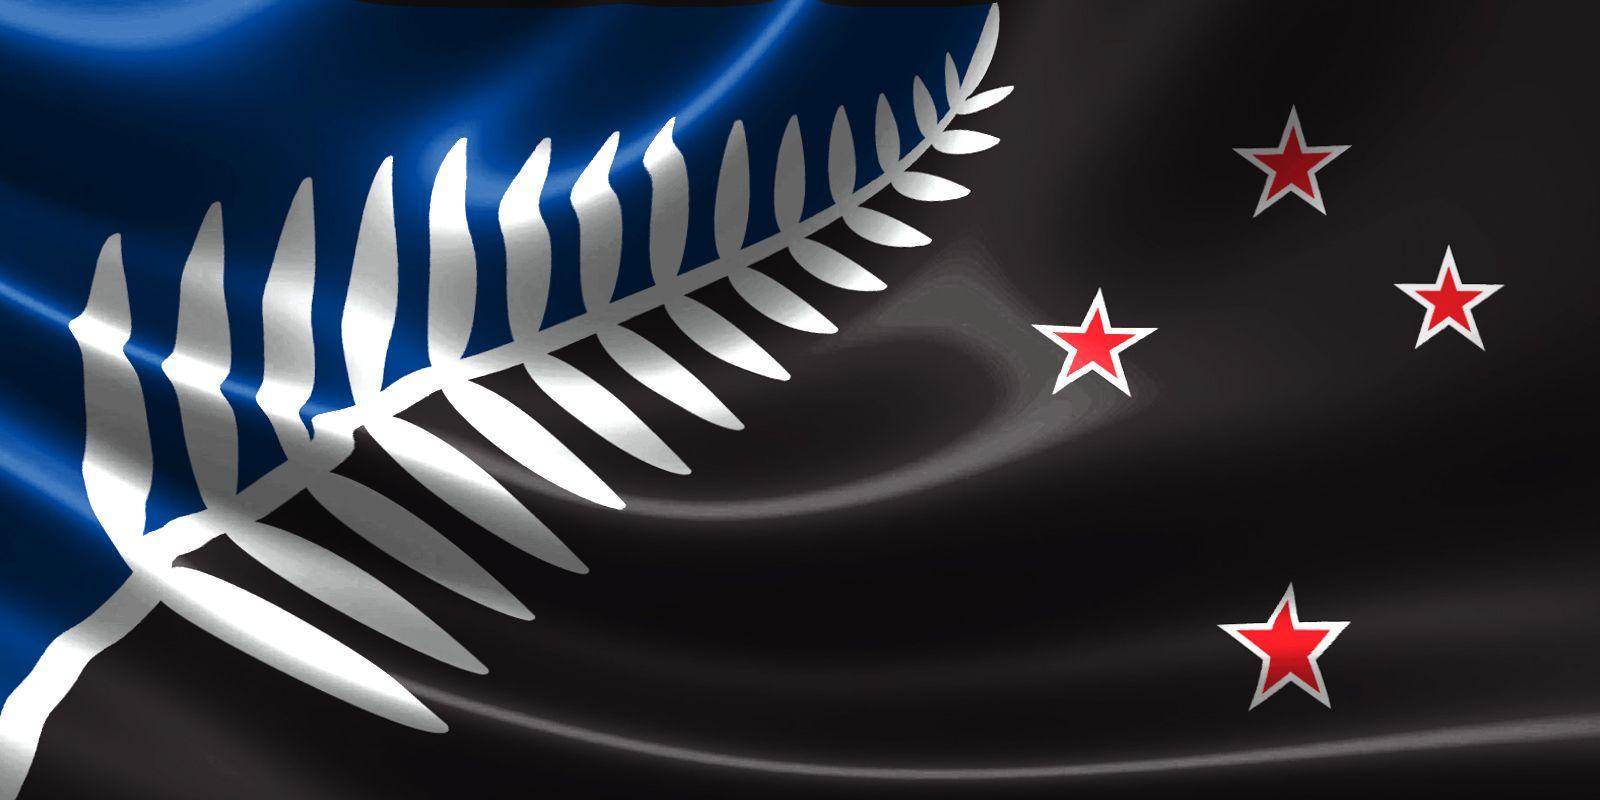 Free Download Newzealand Silver Fern Flag HD Pics